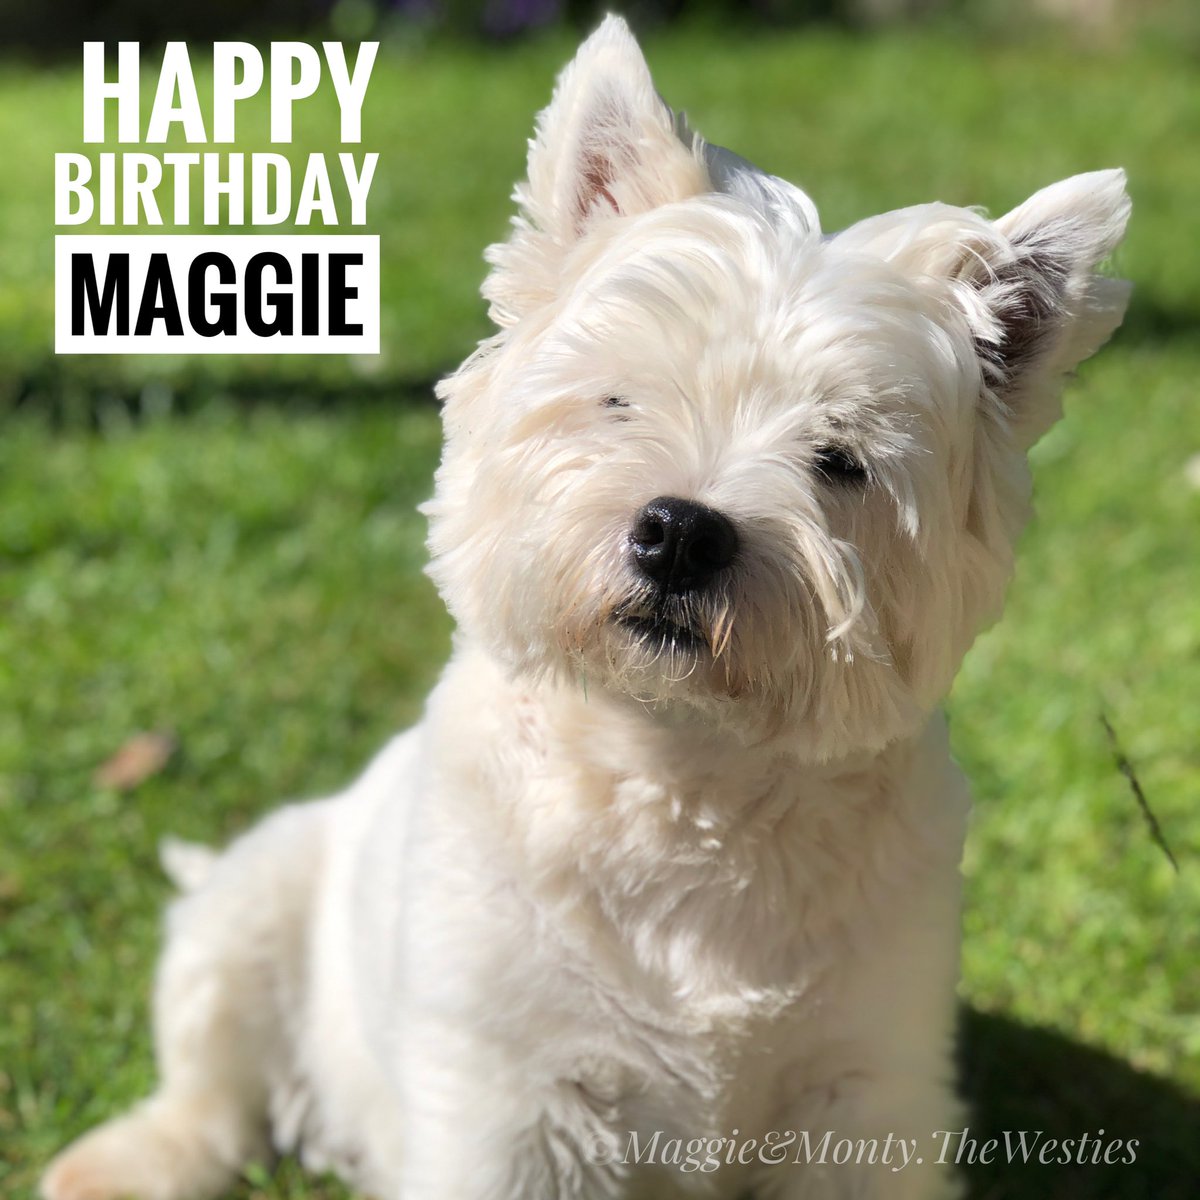 Happy 9th Birthday Maggie!

#maggiethewestie #maggieandmontythewesties  #westie #westies #westhighlandterrier #westhighlandterriers #westhighlandwhiteterrier  #birthdaygirl #happybirthday #happy9thbirthday #dogsoftwitter #westiesoftwitter